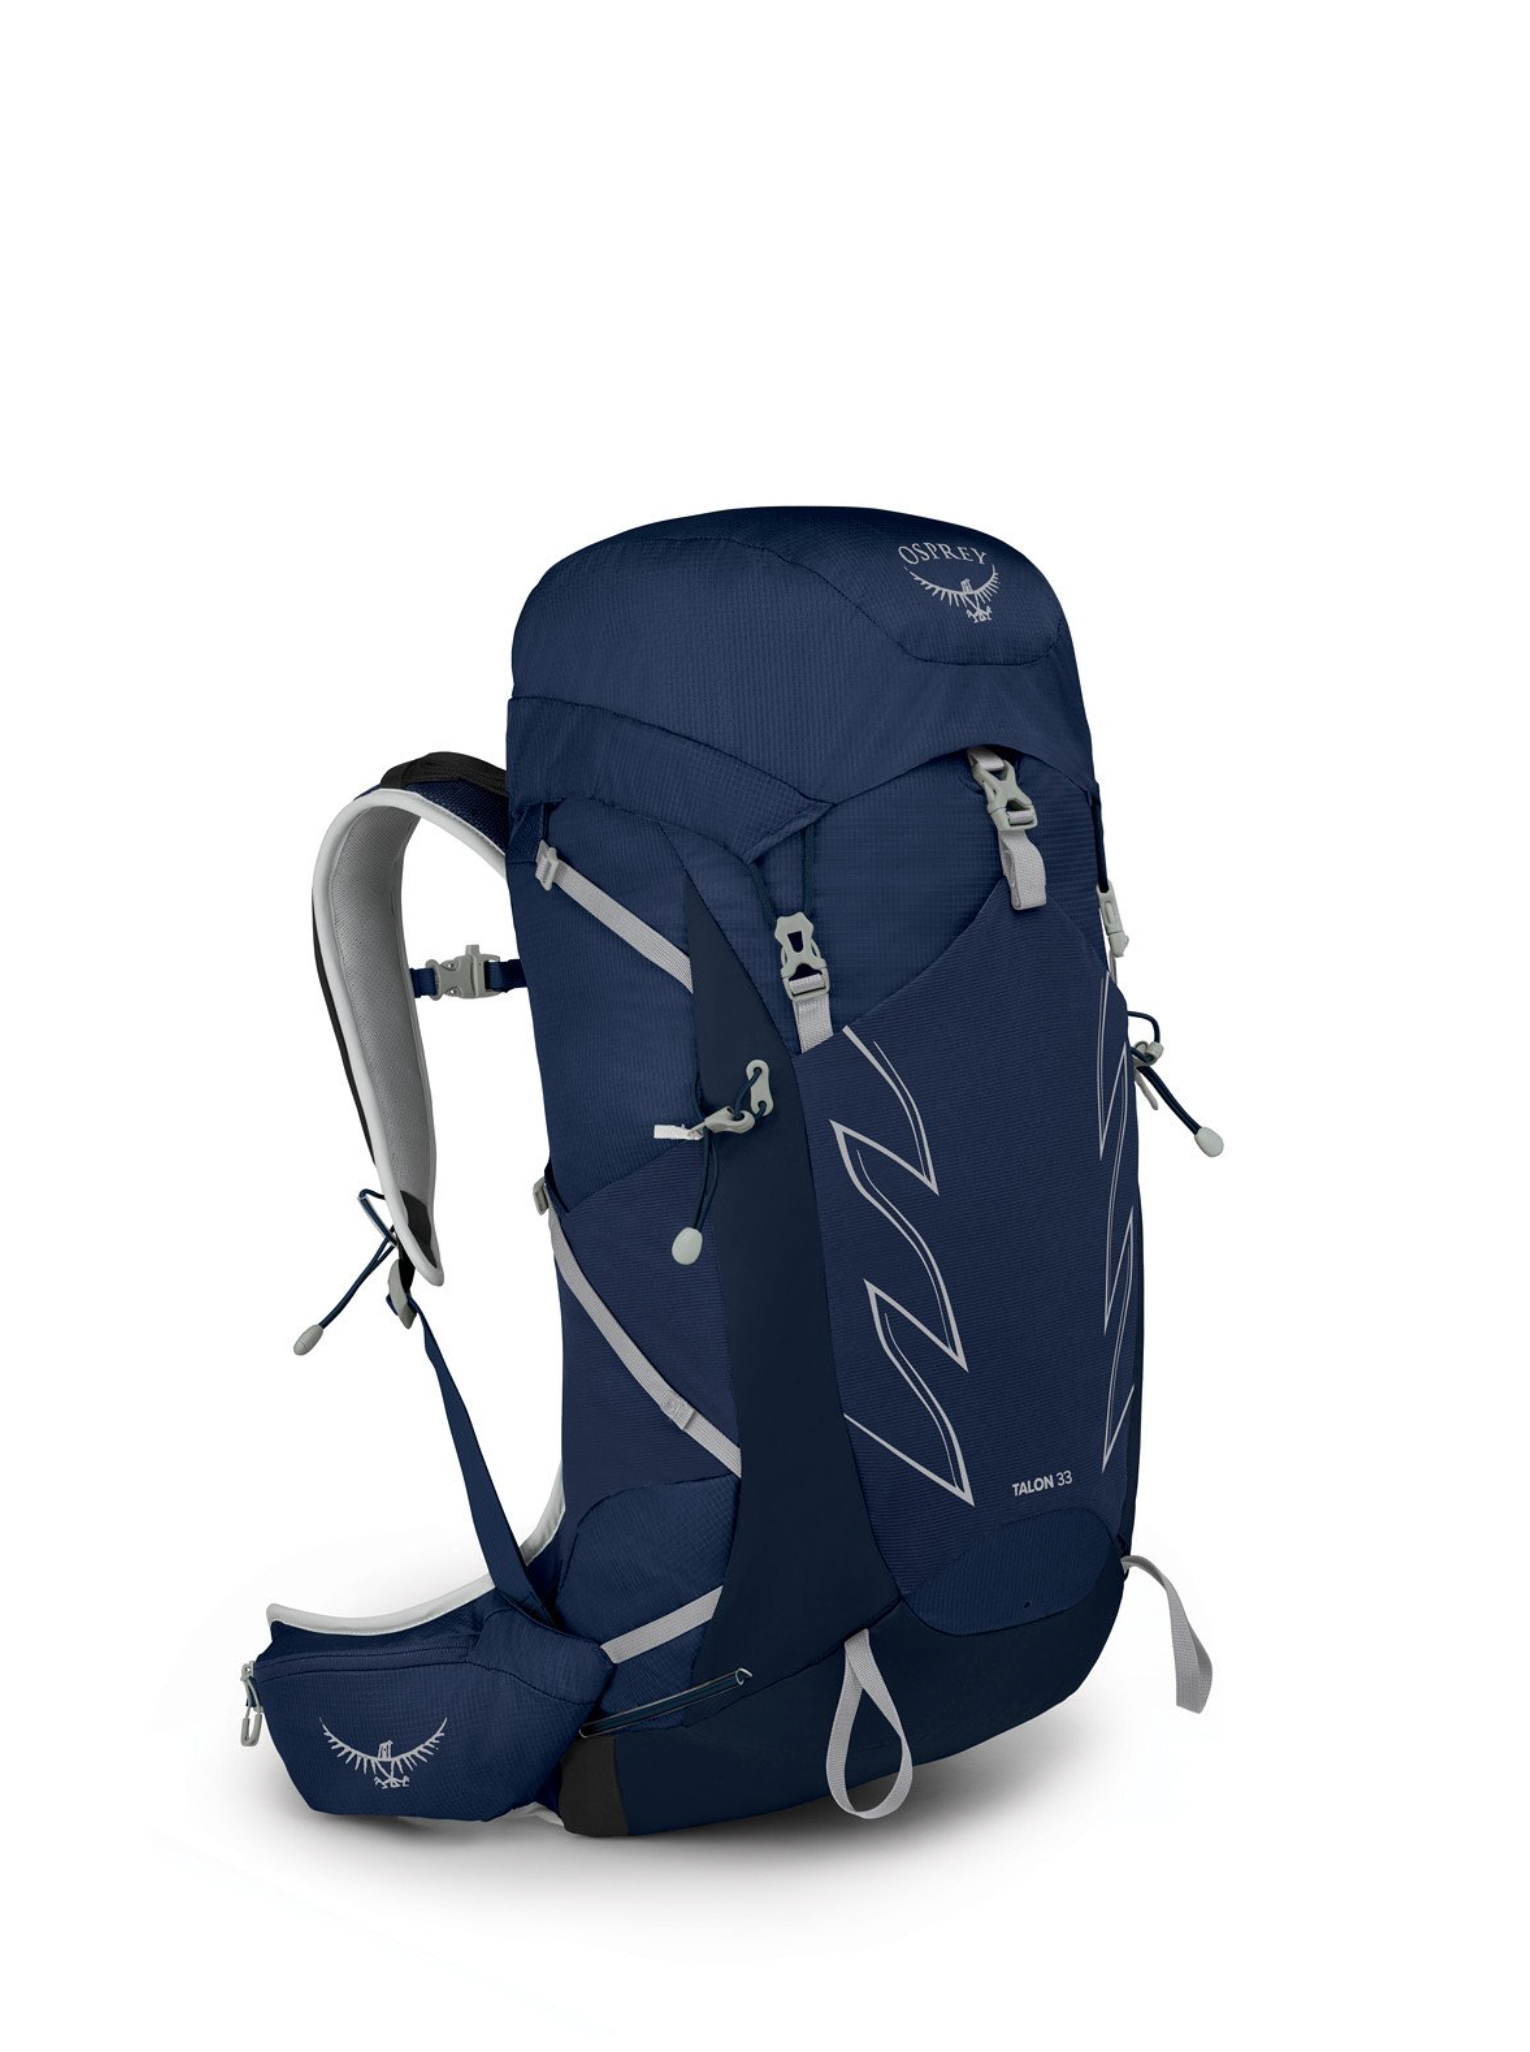 Talon 33 Hiking Backpack